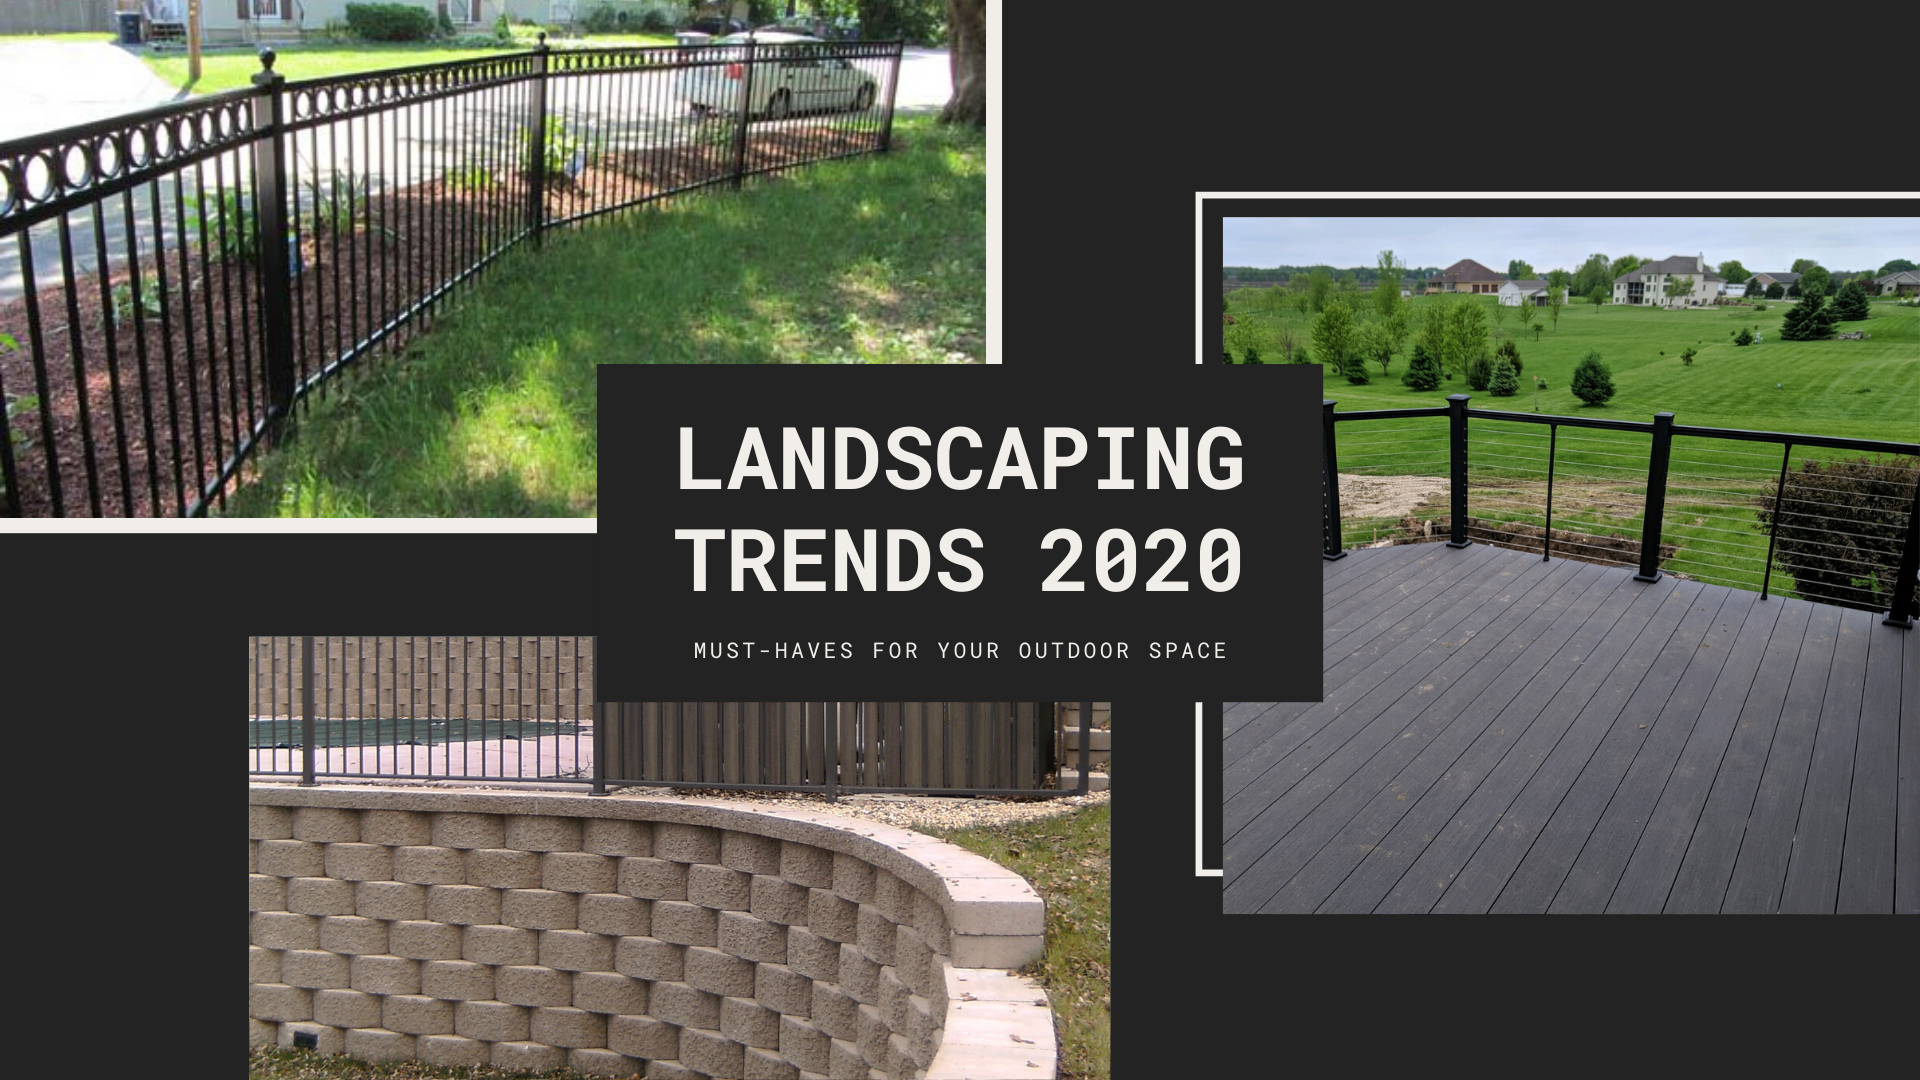 Landscaping|trends|2020|year|madison|outdoor|design|space|wisconsin|garden|deck|sleek|dane|county|fence